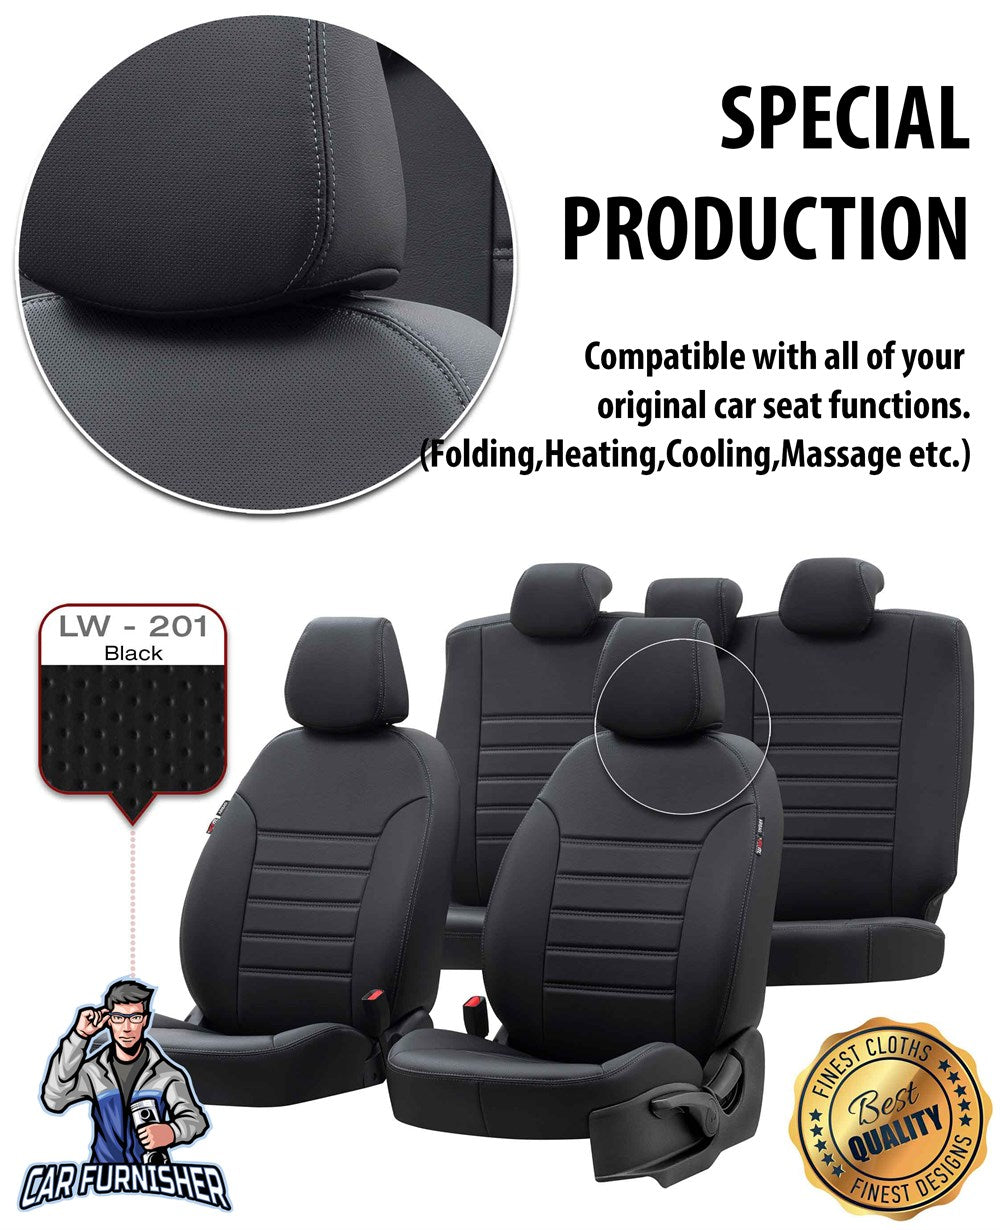 Kia Cerato Seat Covers Istanbul Leather Design Black Leather